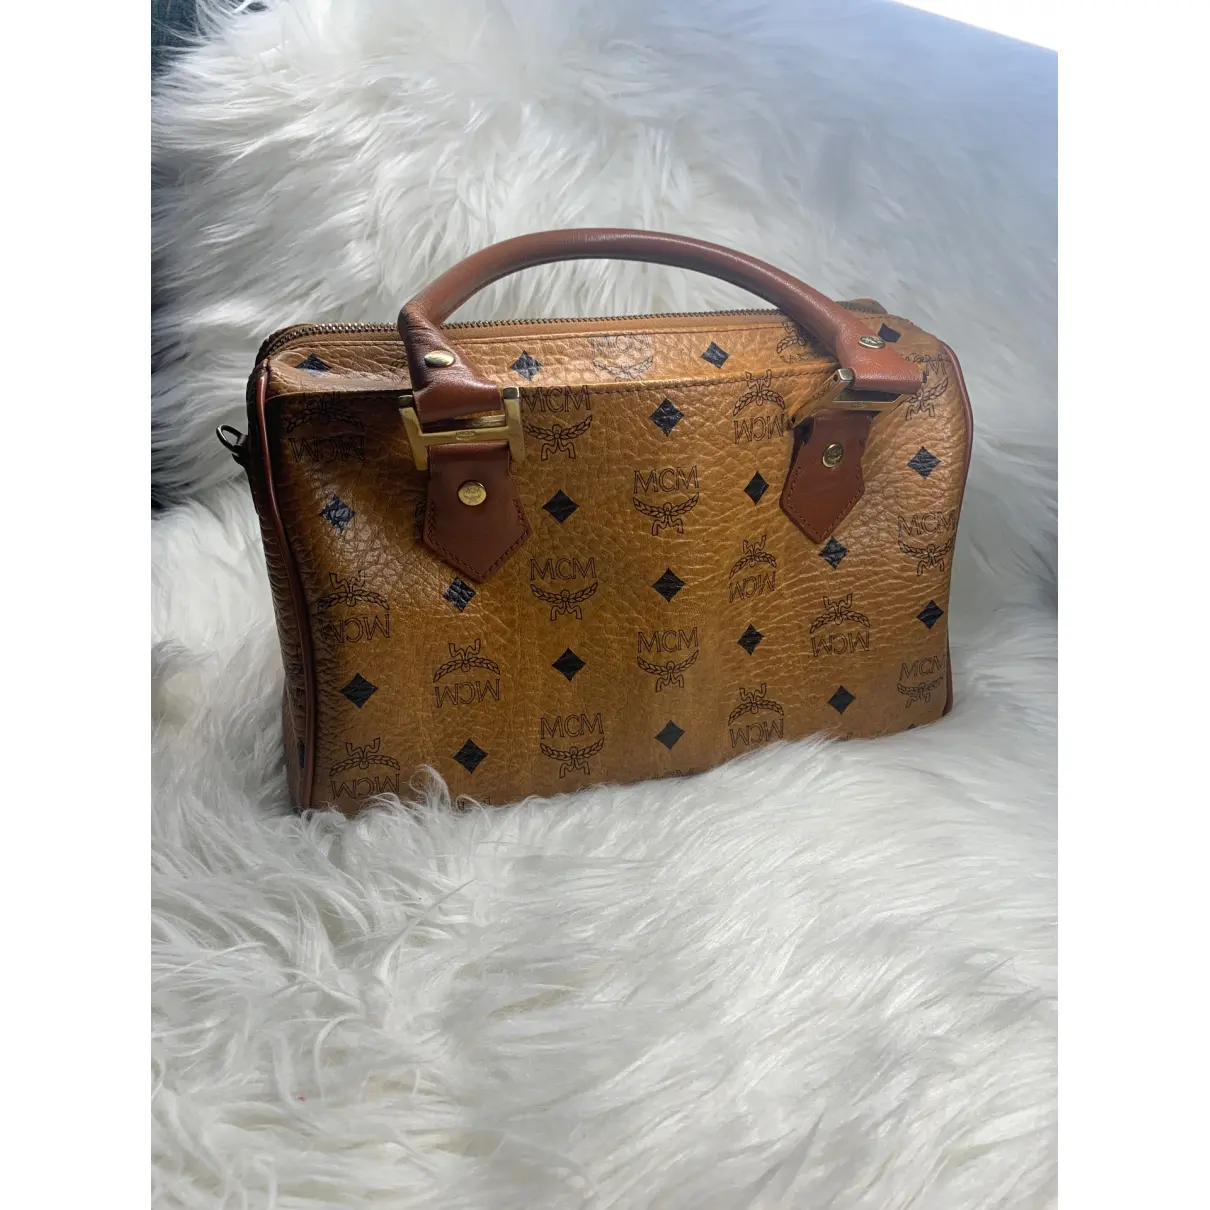 Buy MCM Boston leather handbag online